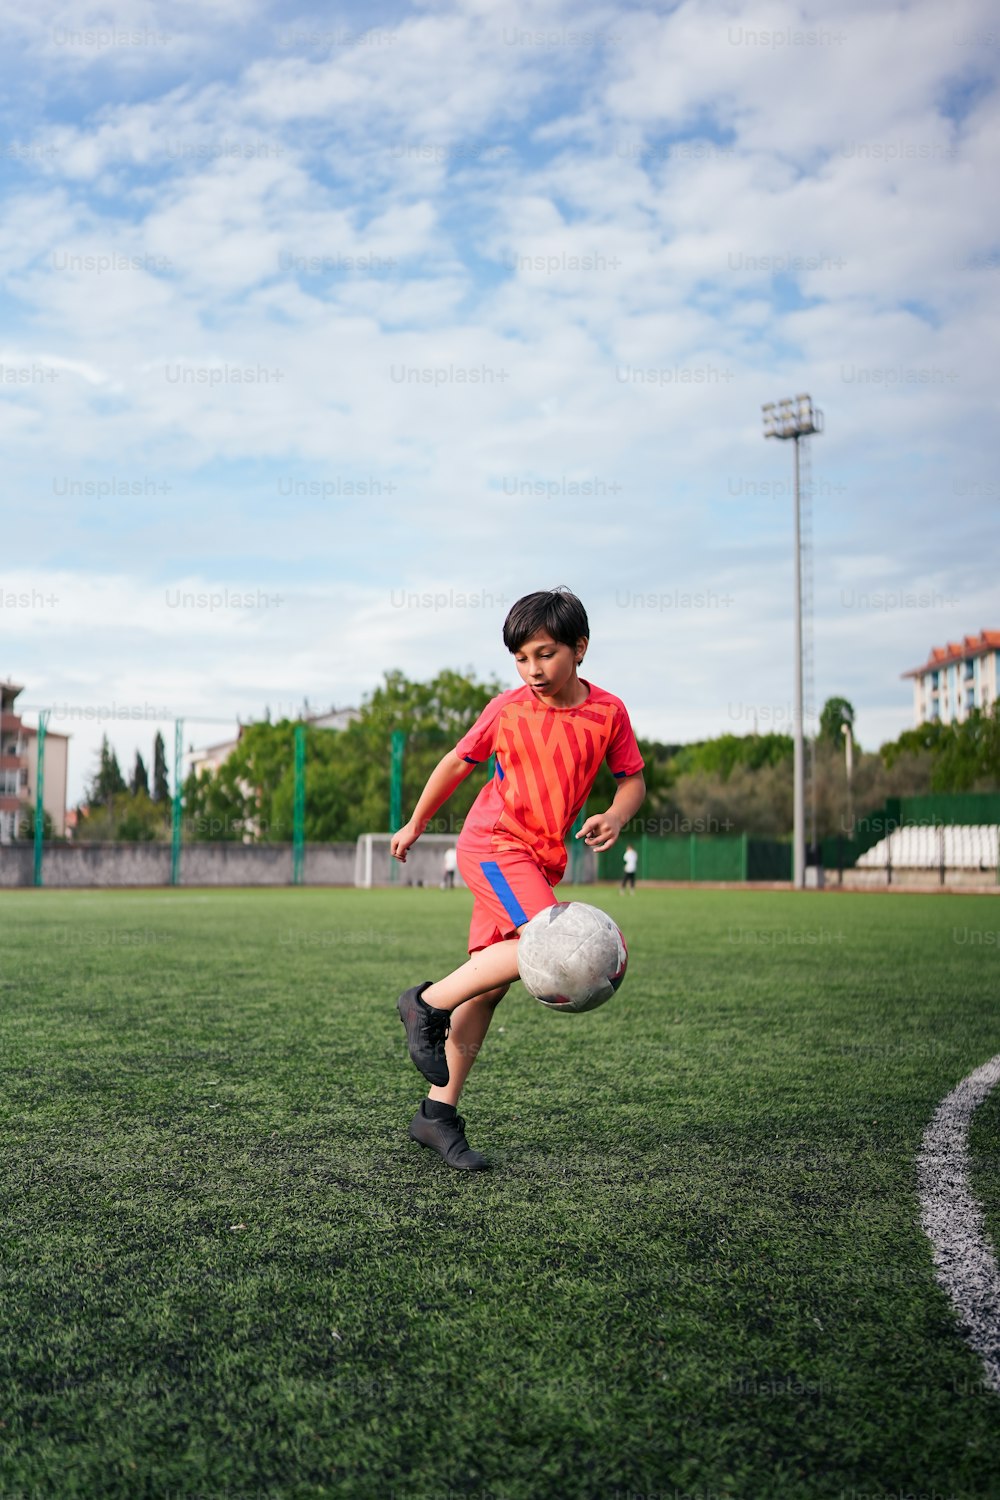 Un jeune garçon tapant dans un ballon de football sur un terrain